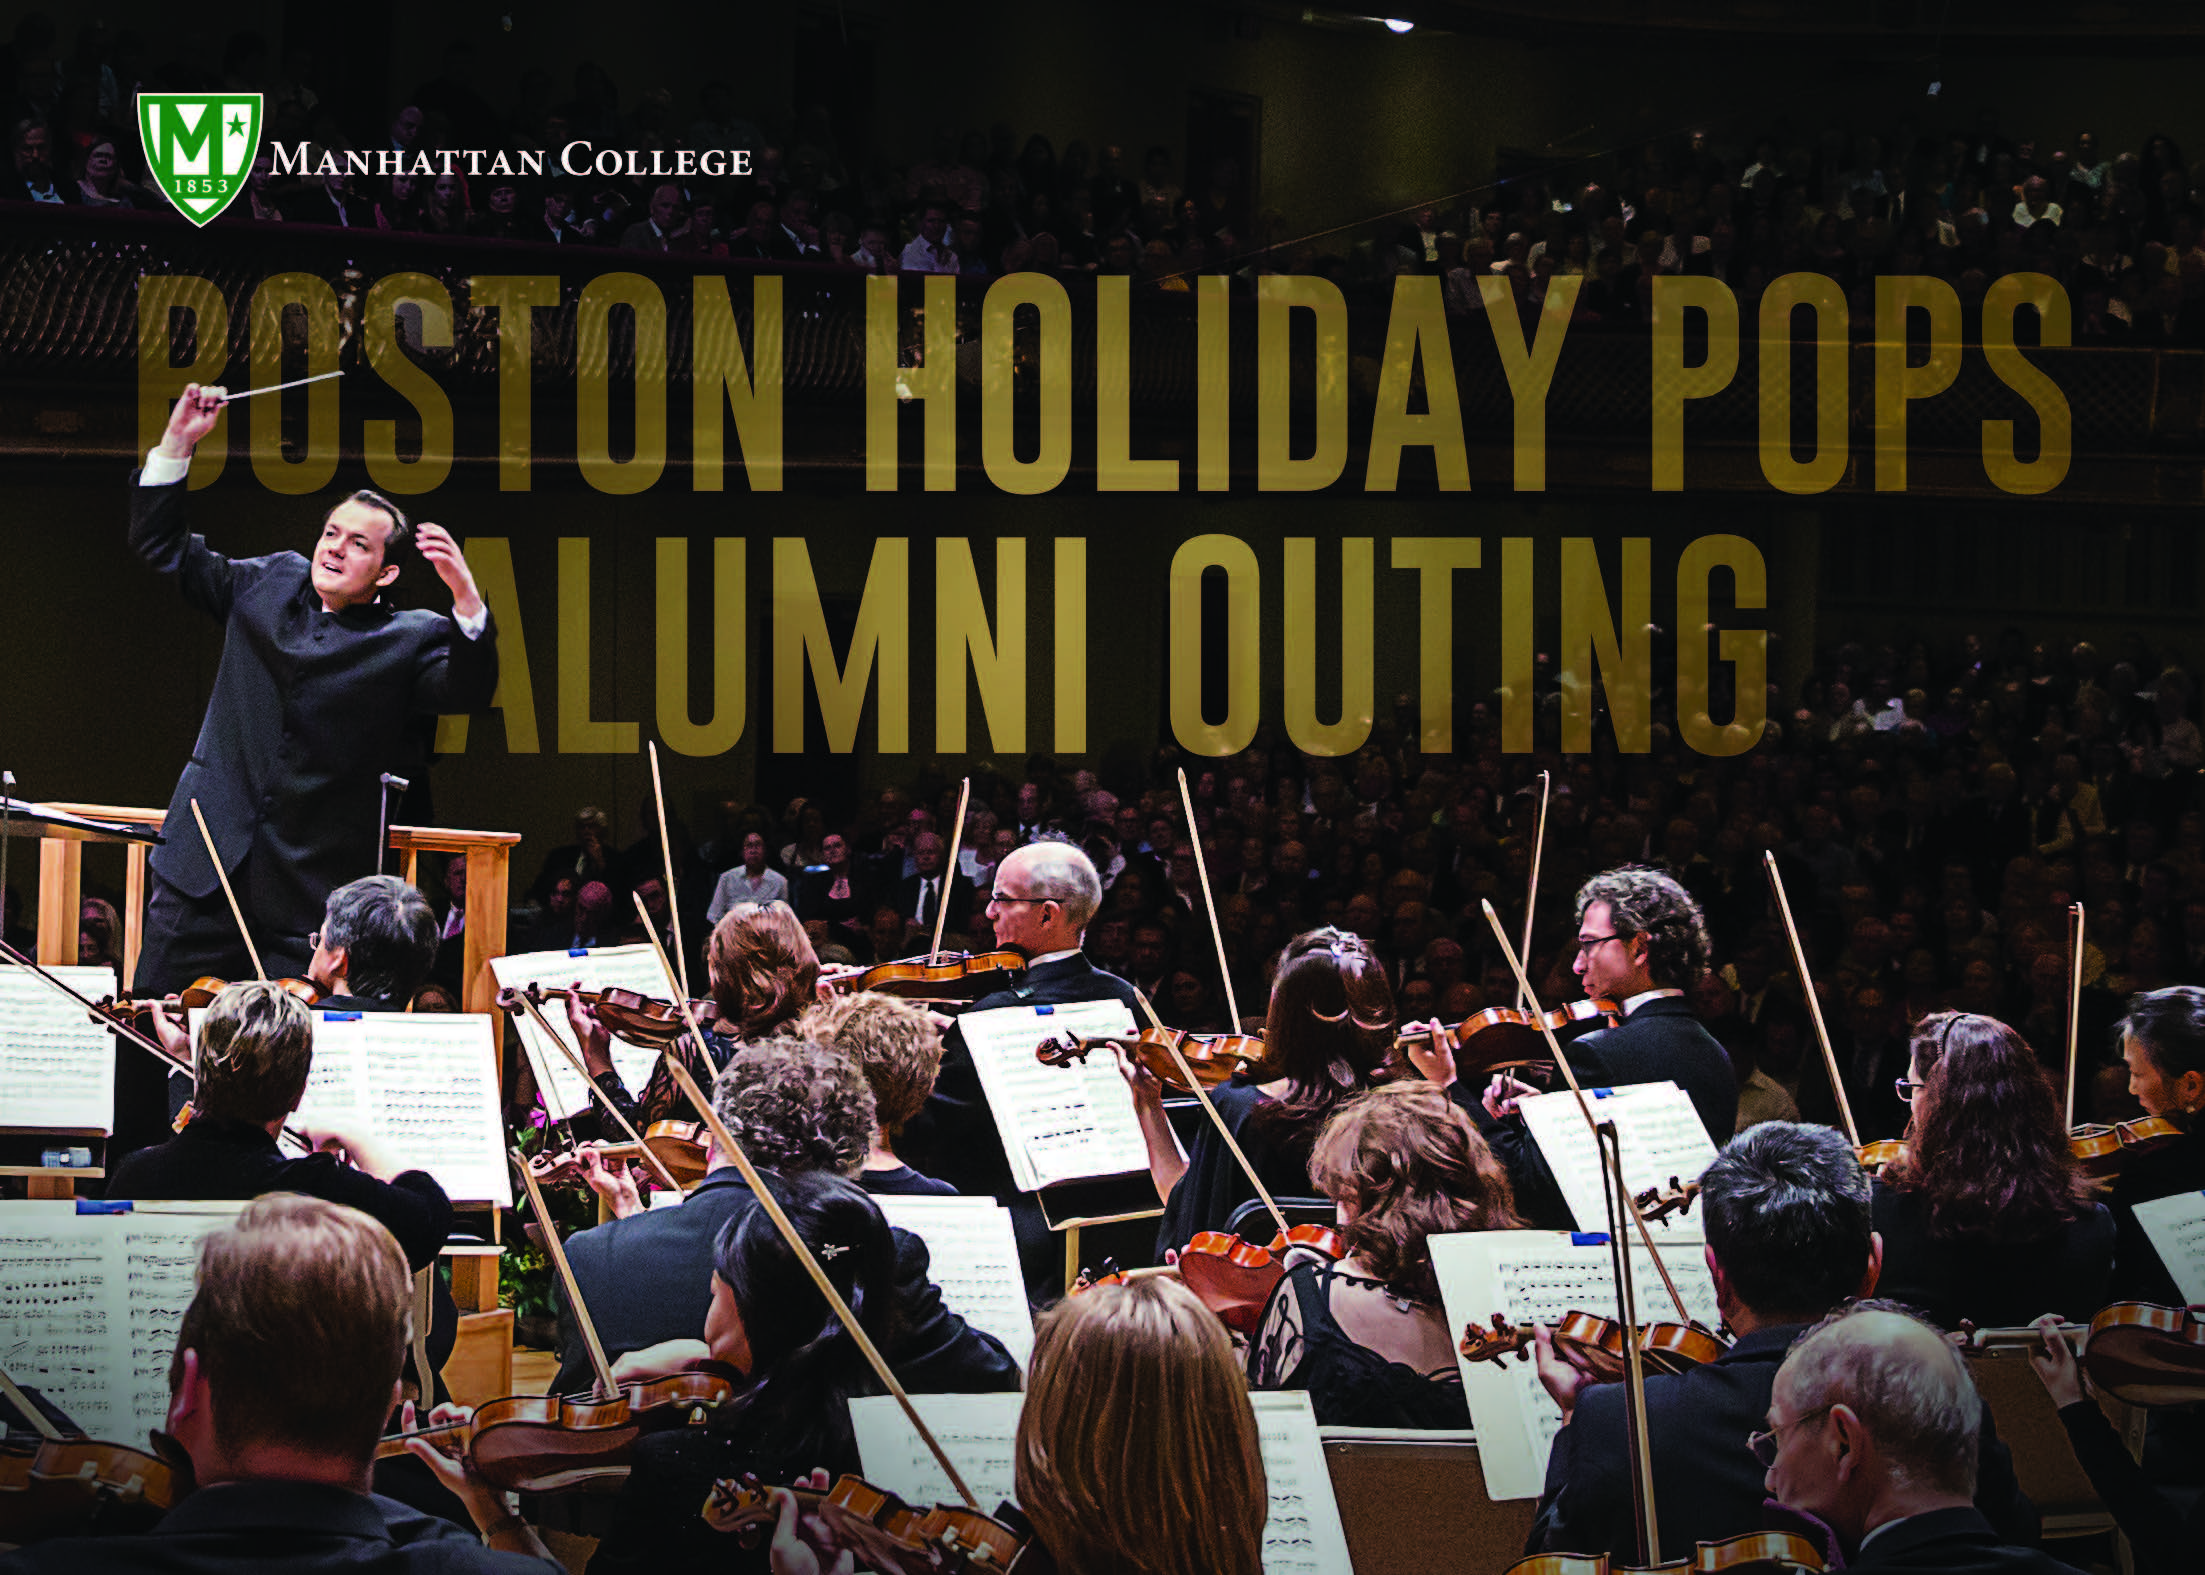 Boston Holiday Pops Alumni Outing